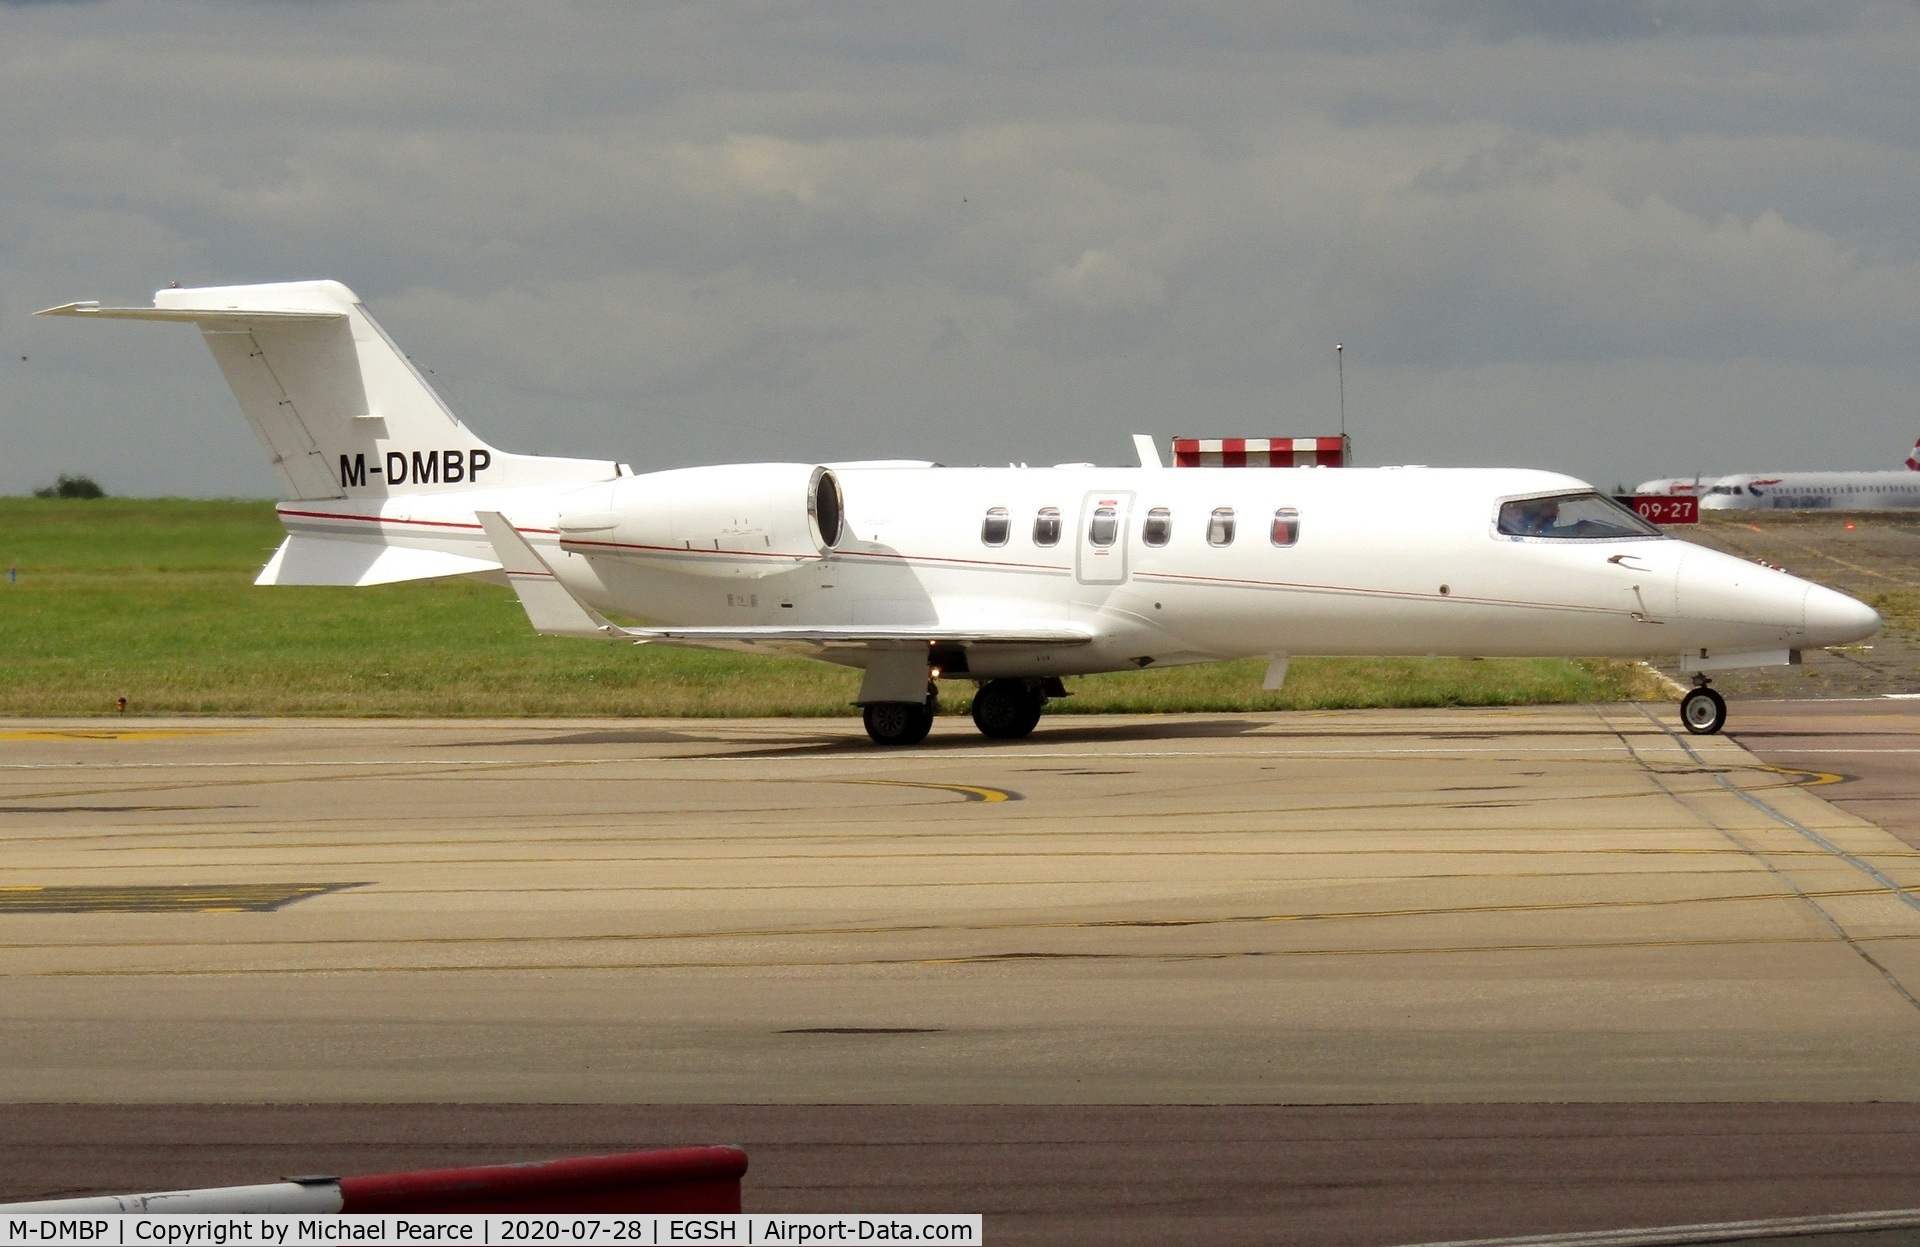 M-DMBP, 2012 Learjet 40 C/N 45-2133, Departing SaxonAir to Dublin (DUB) after a quick visit.